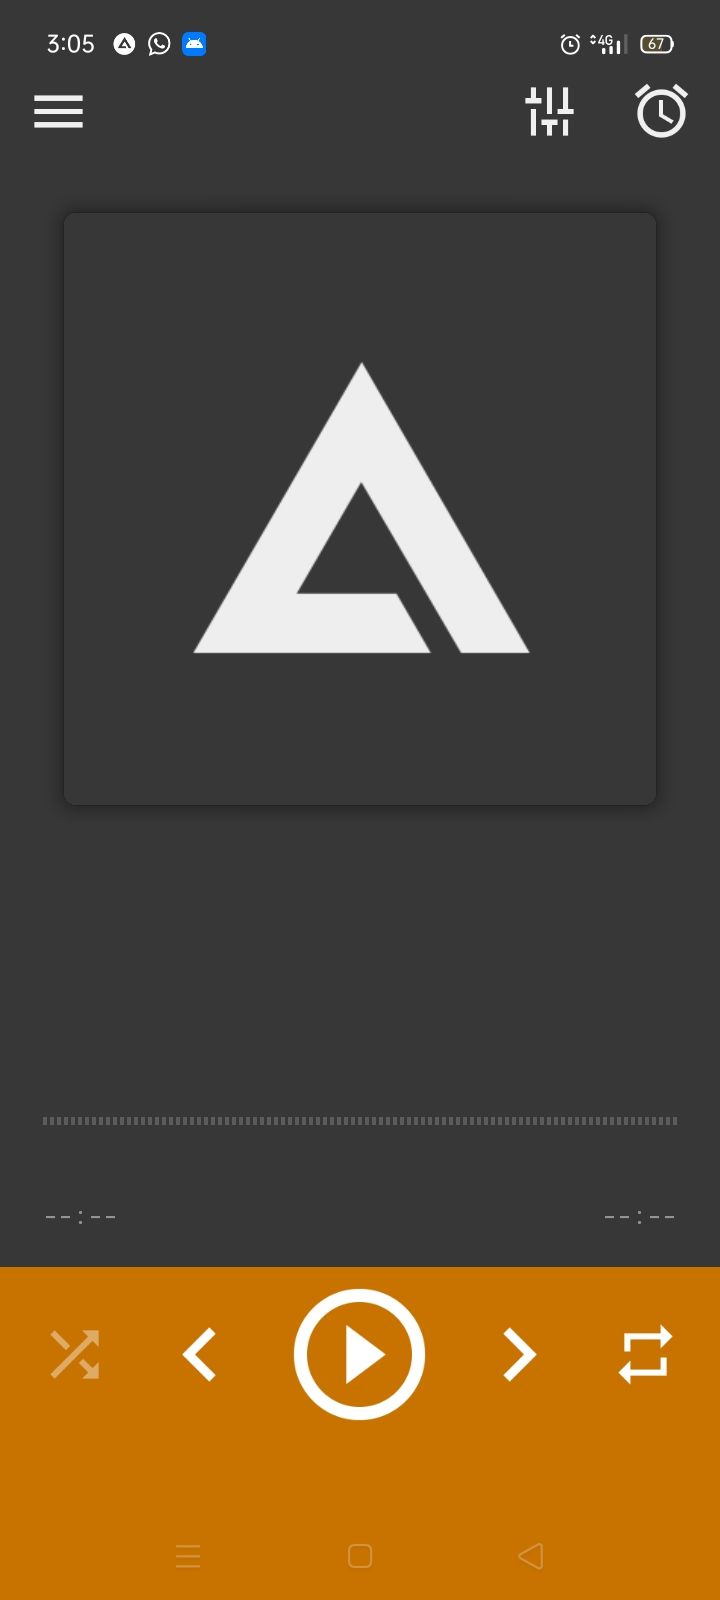 screenshot of AIMP android music player homescreen